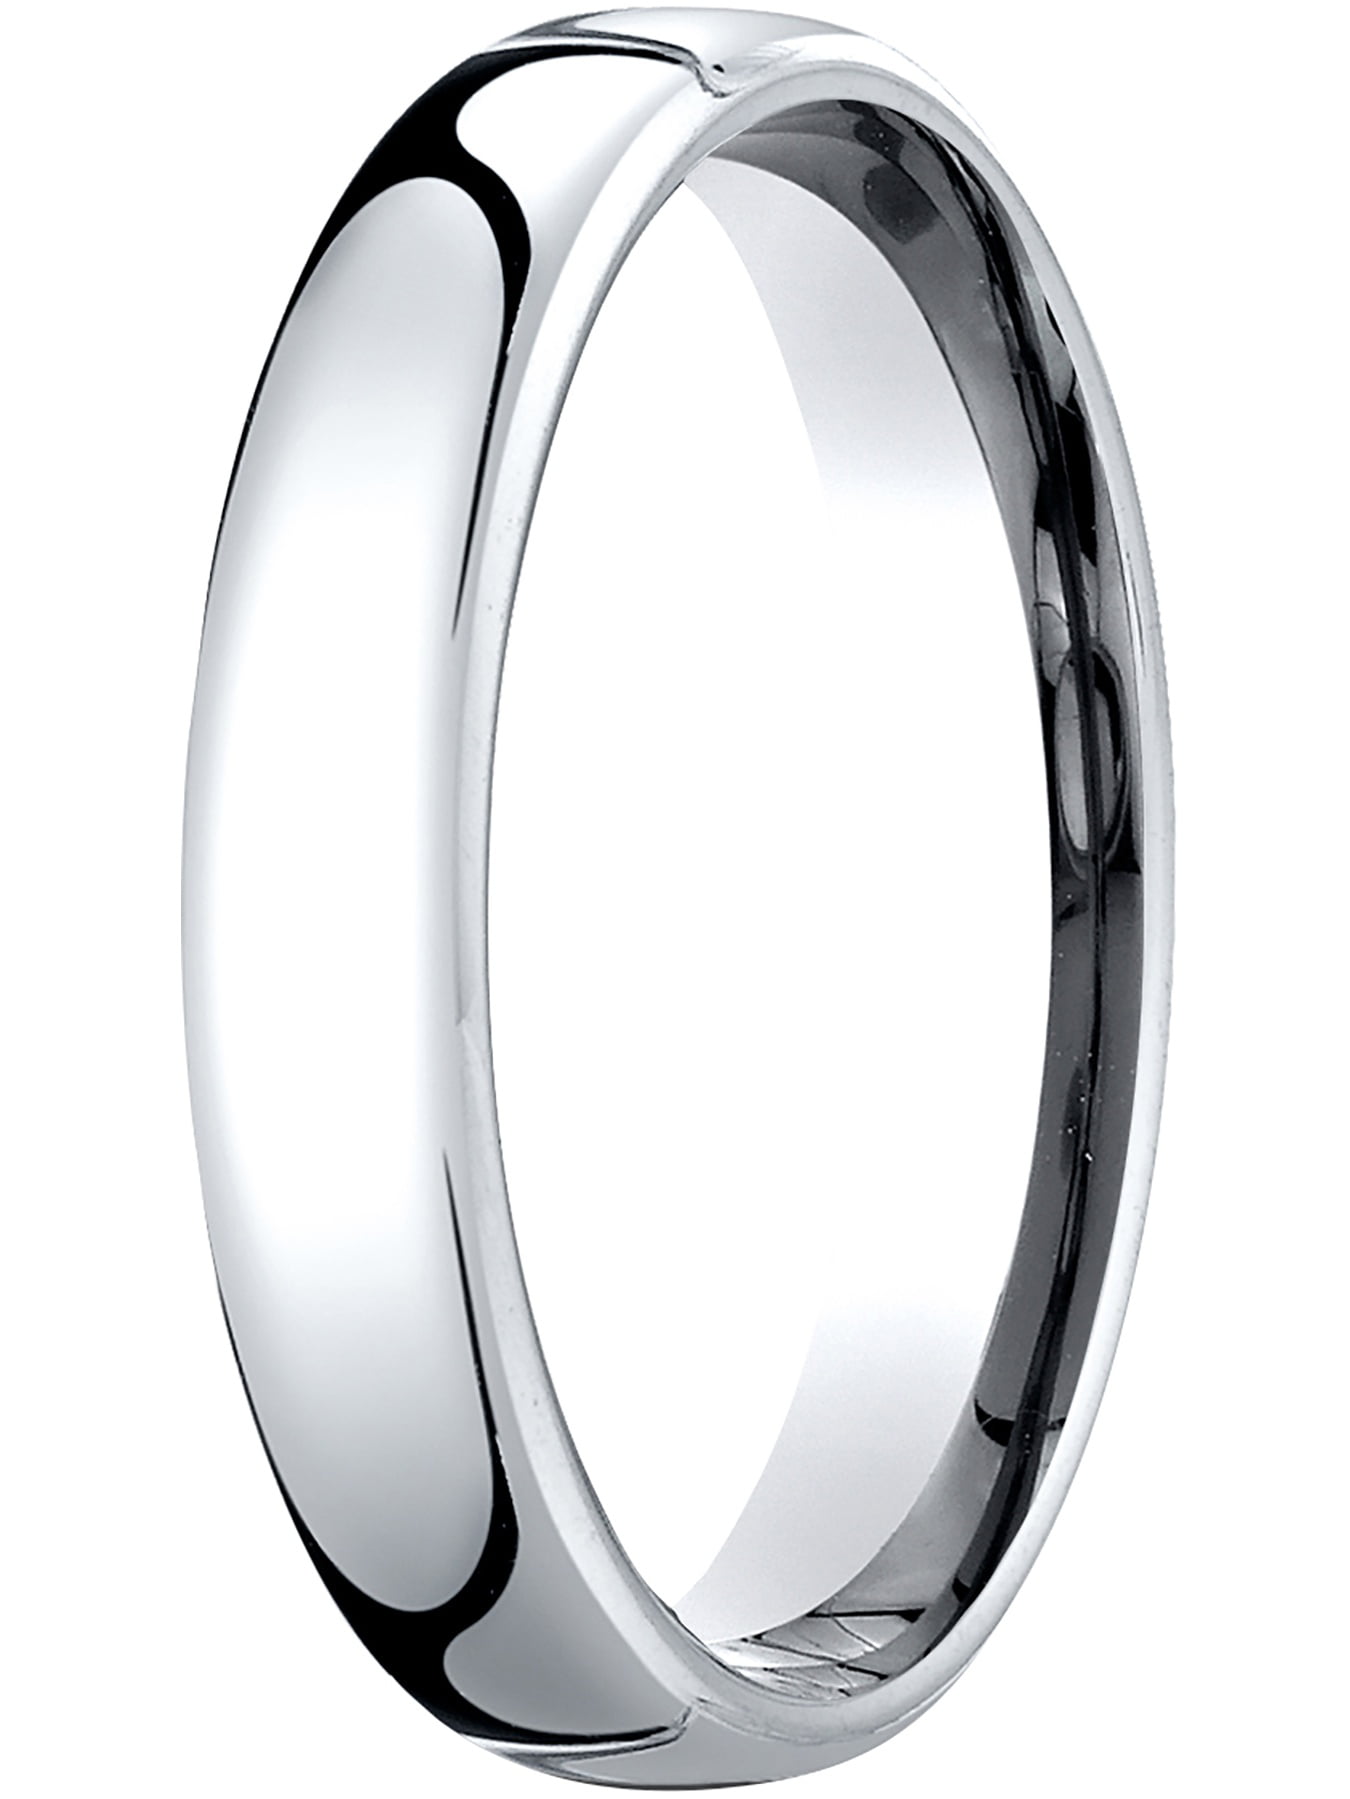 Palladium Diamond Ring Channel Set  Solid Palladium 4.5mm Wedding Ring